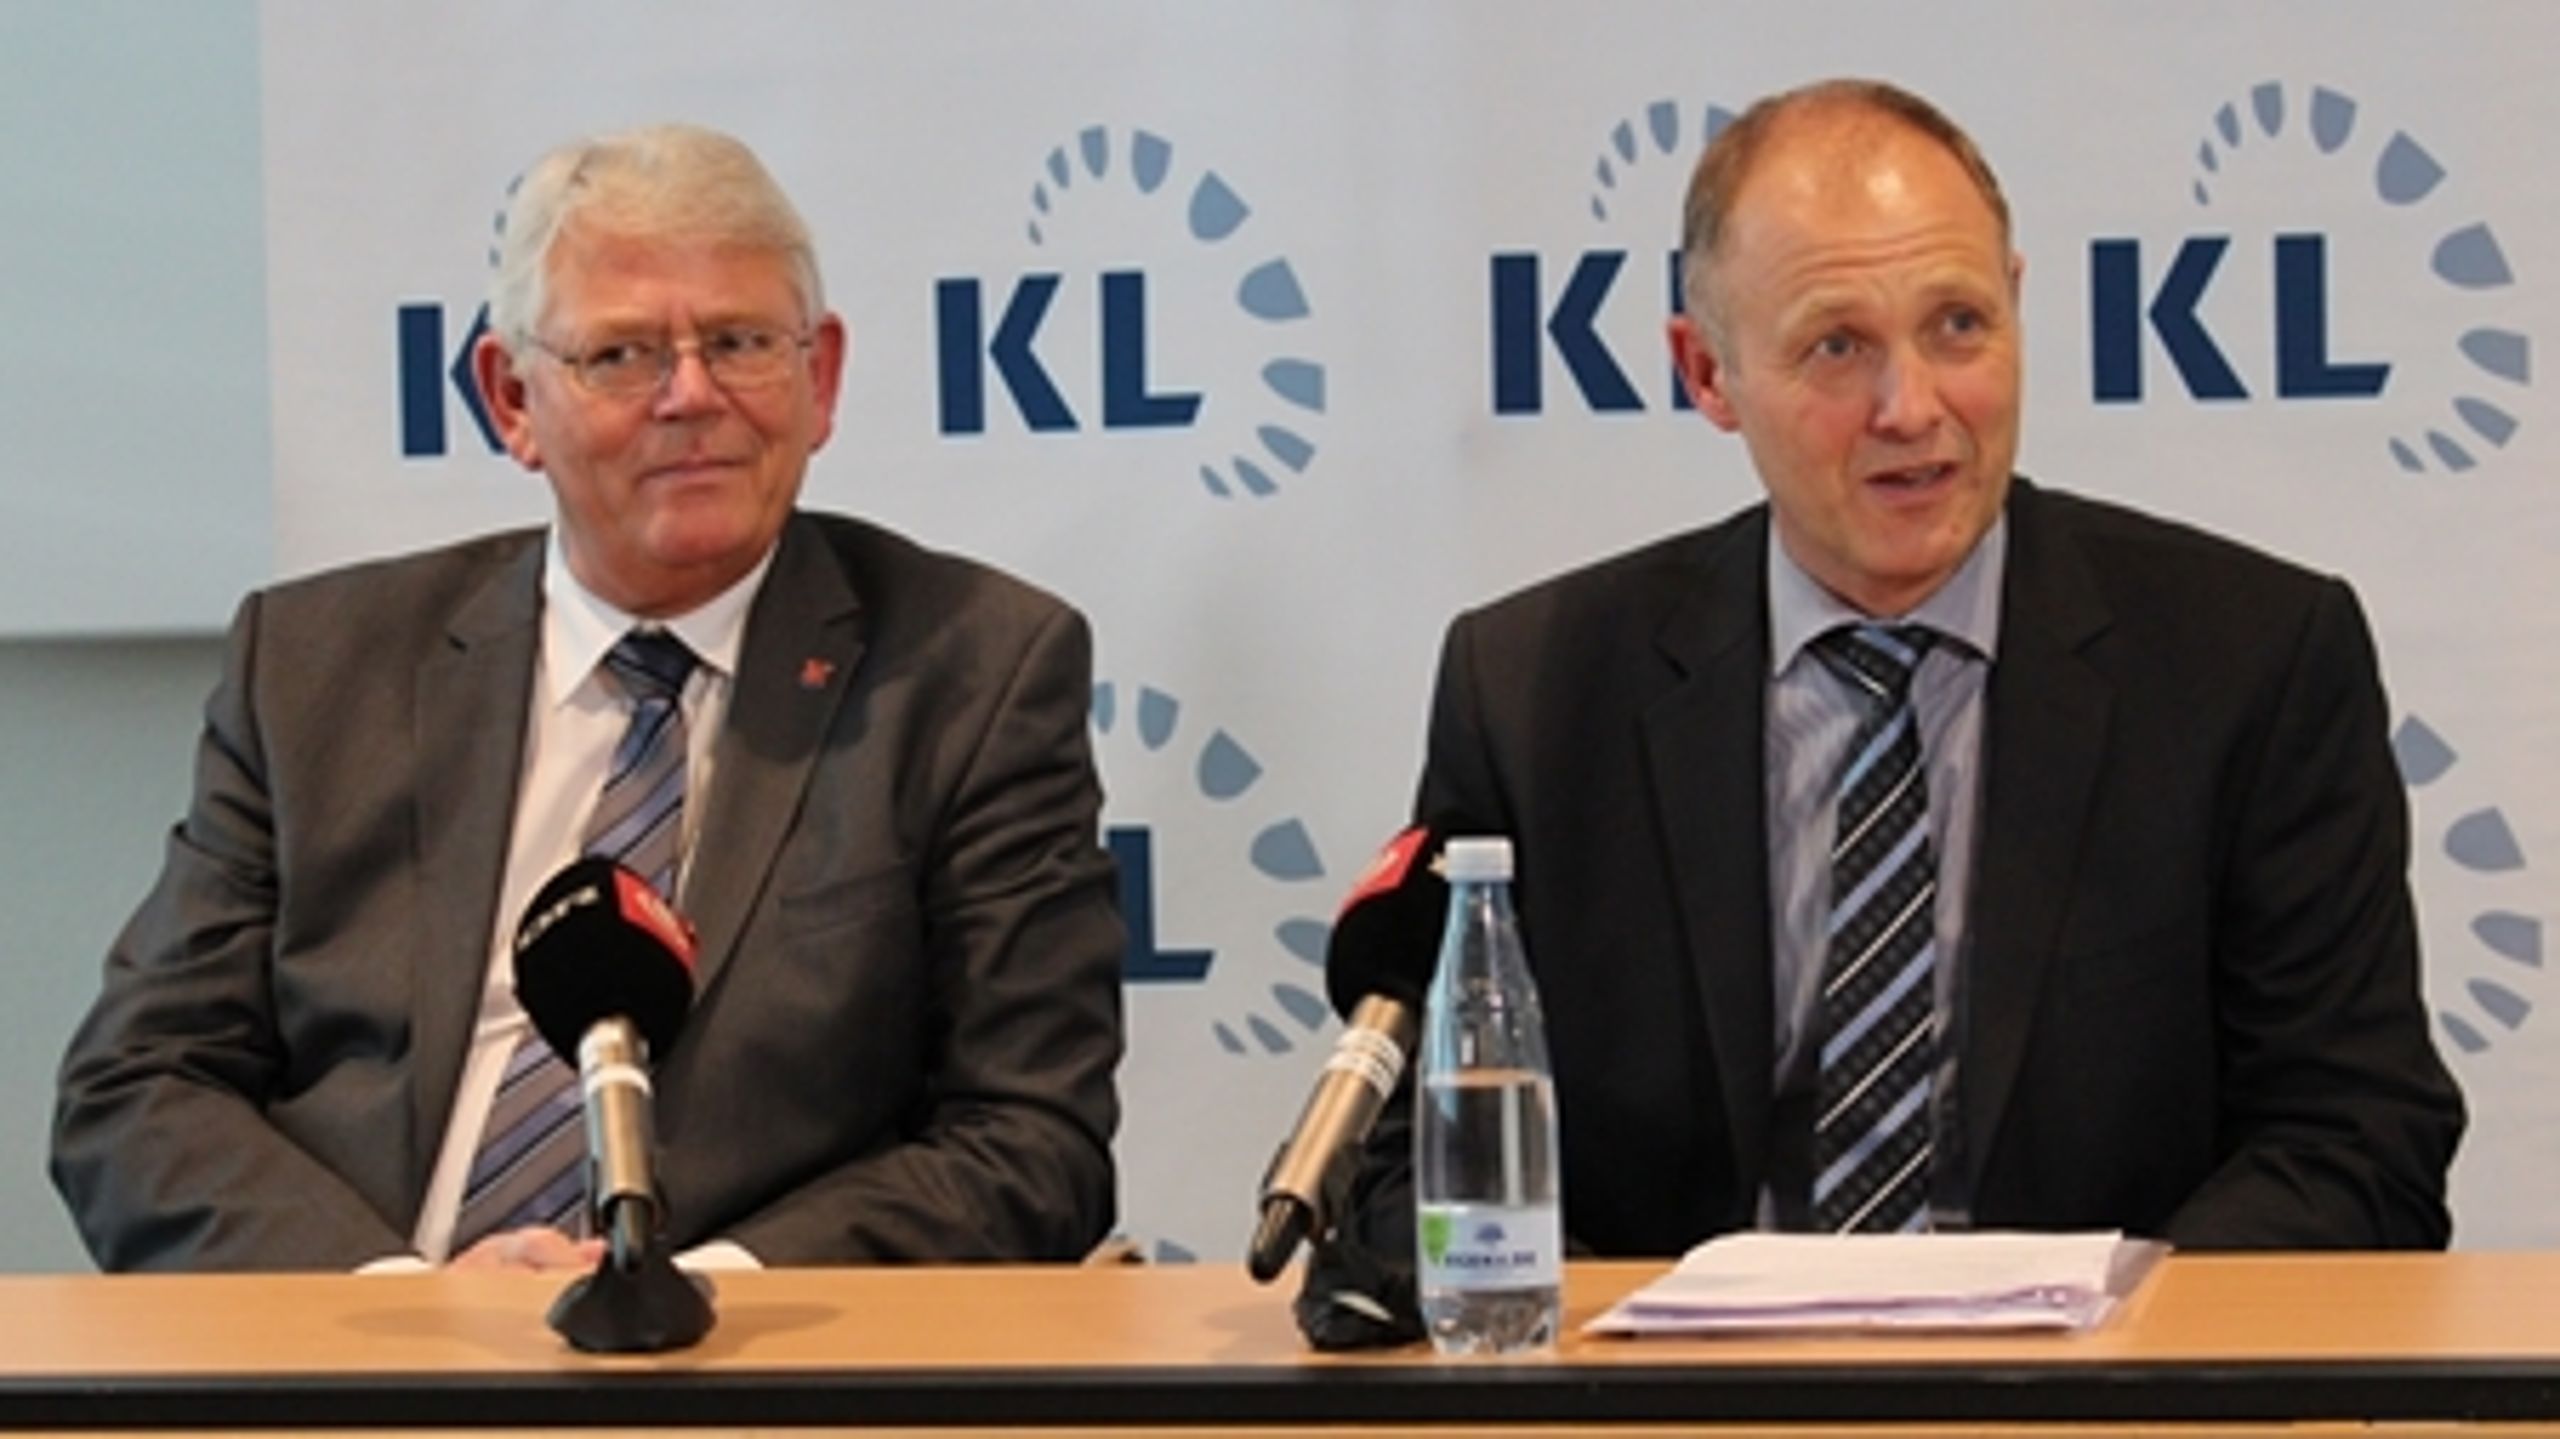 Rødovres borgmester Erik Nielsen (S) har nu officielt overladt KL-formandsposten til Kalundborg-borgmester Martin Damm (V).